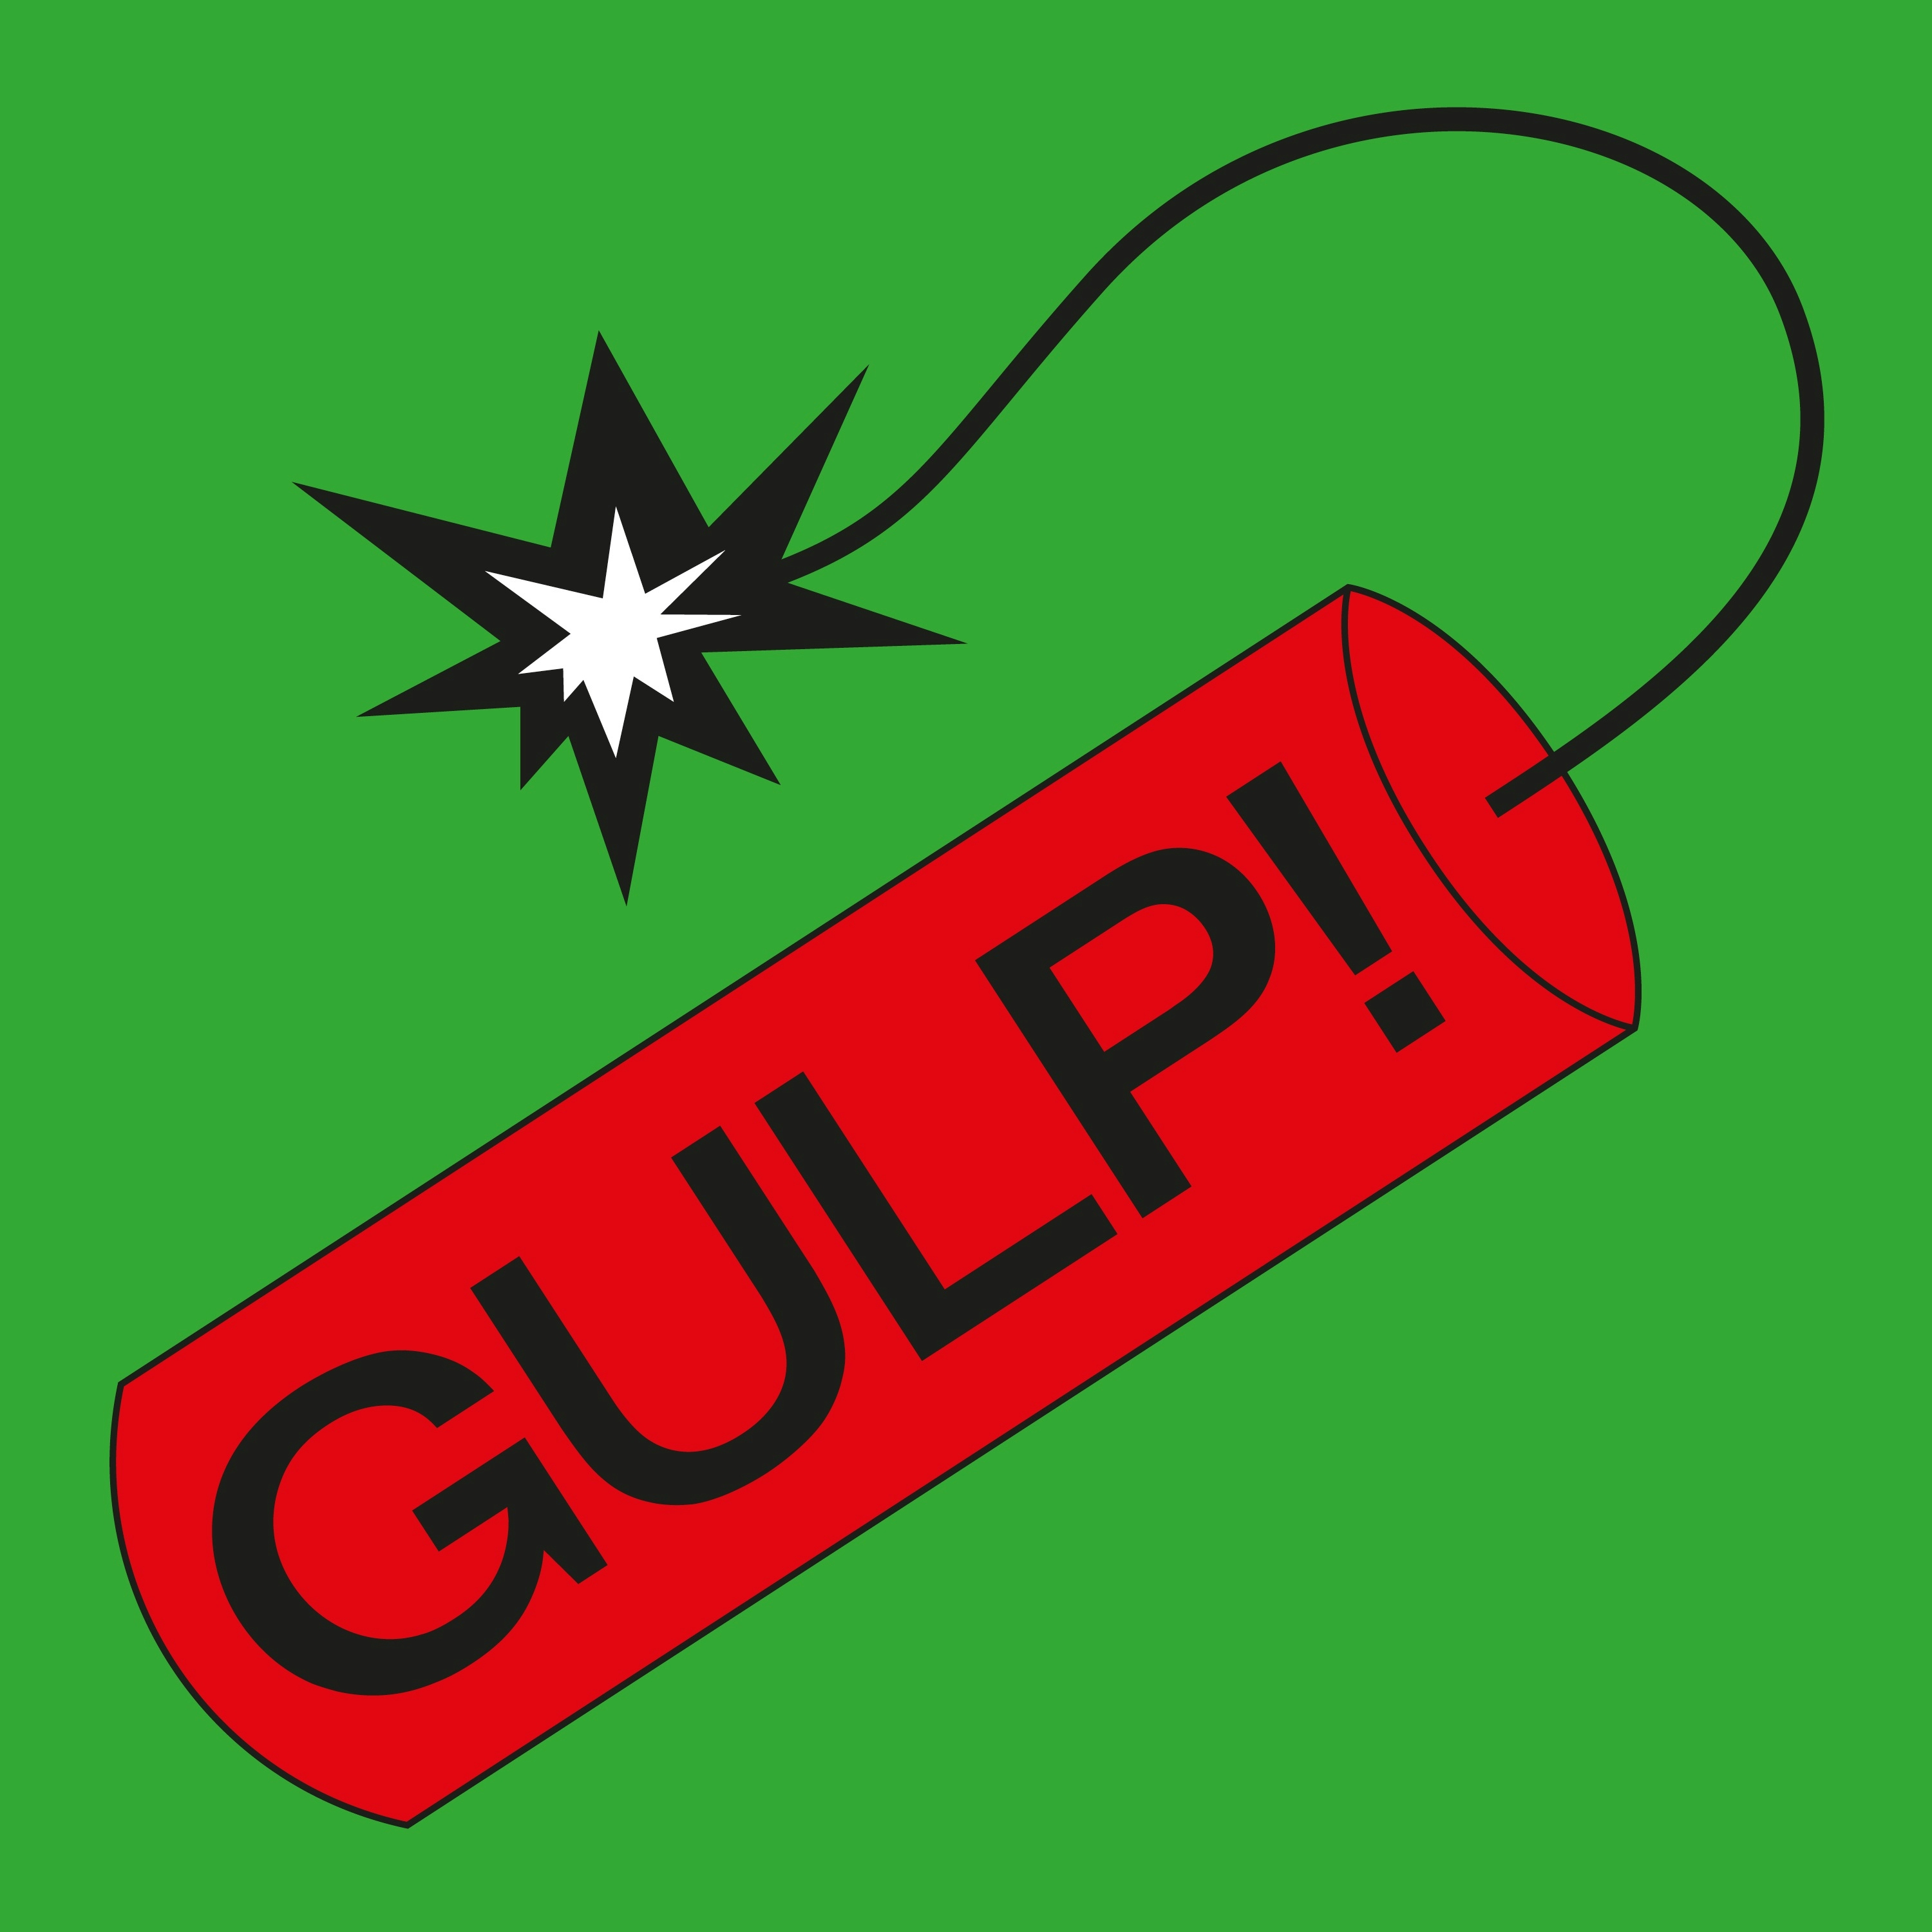 Album artwork for Gulp! by Sports Team